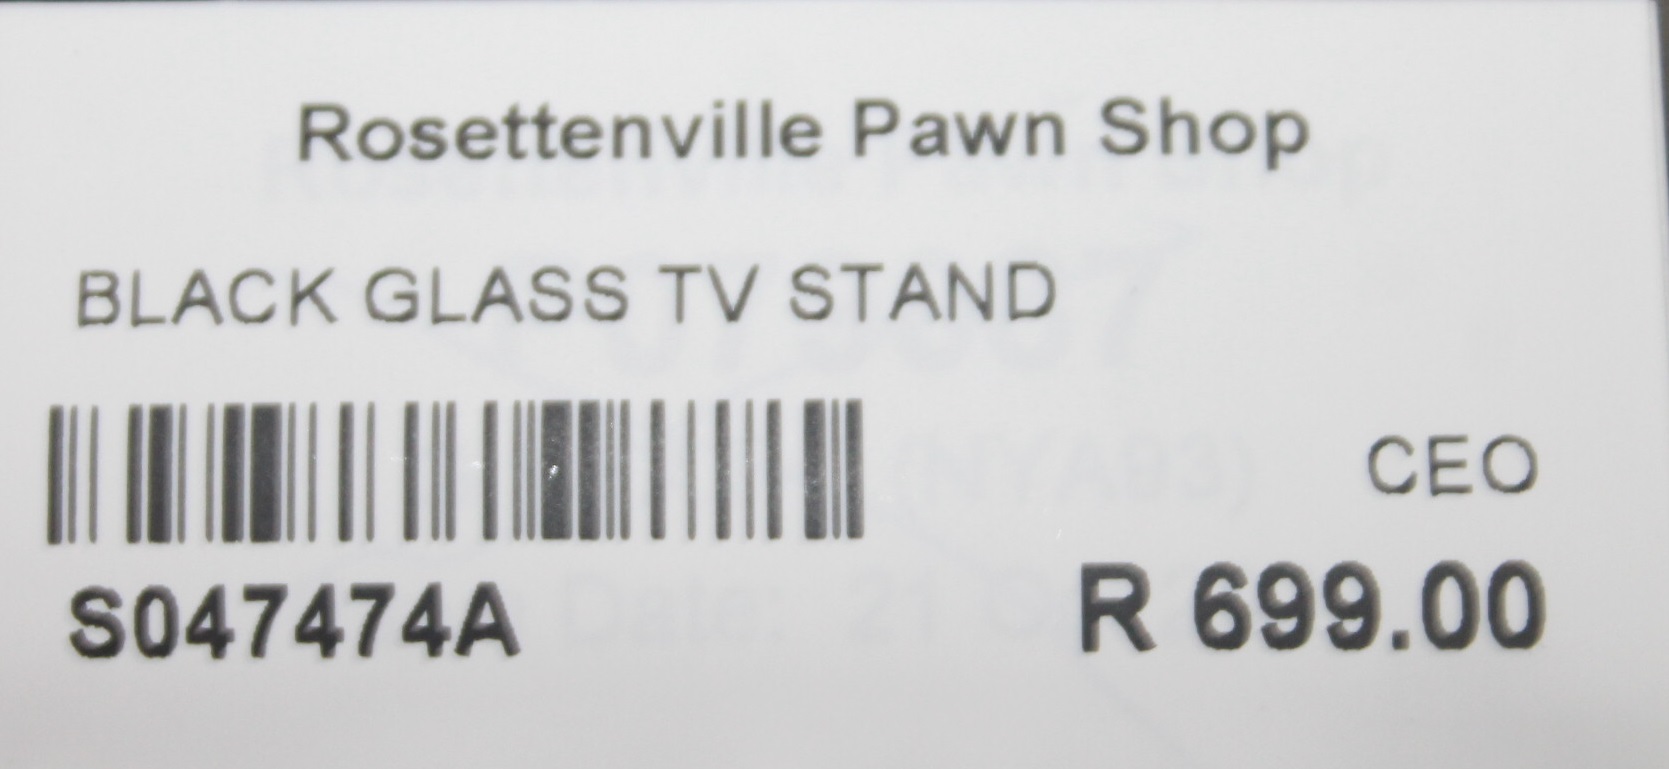 Black glass tv stand S047474A #Rosettenvillepawnshop